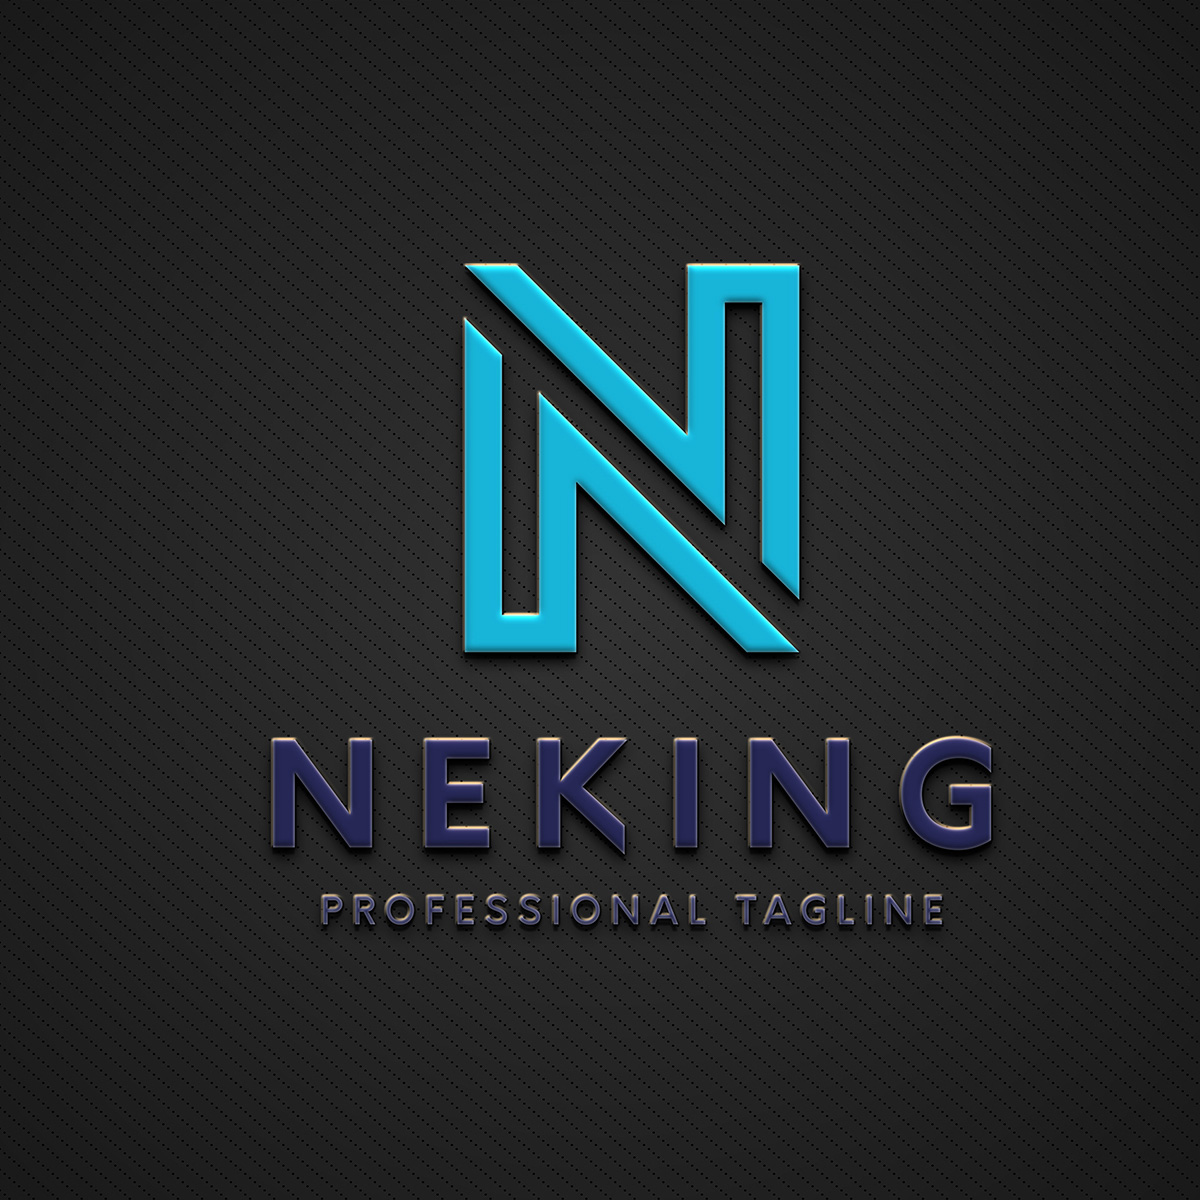 Logo for a professional tagline company.